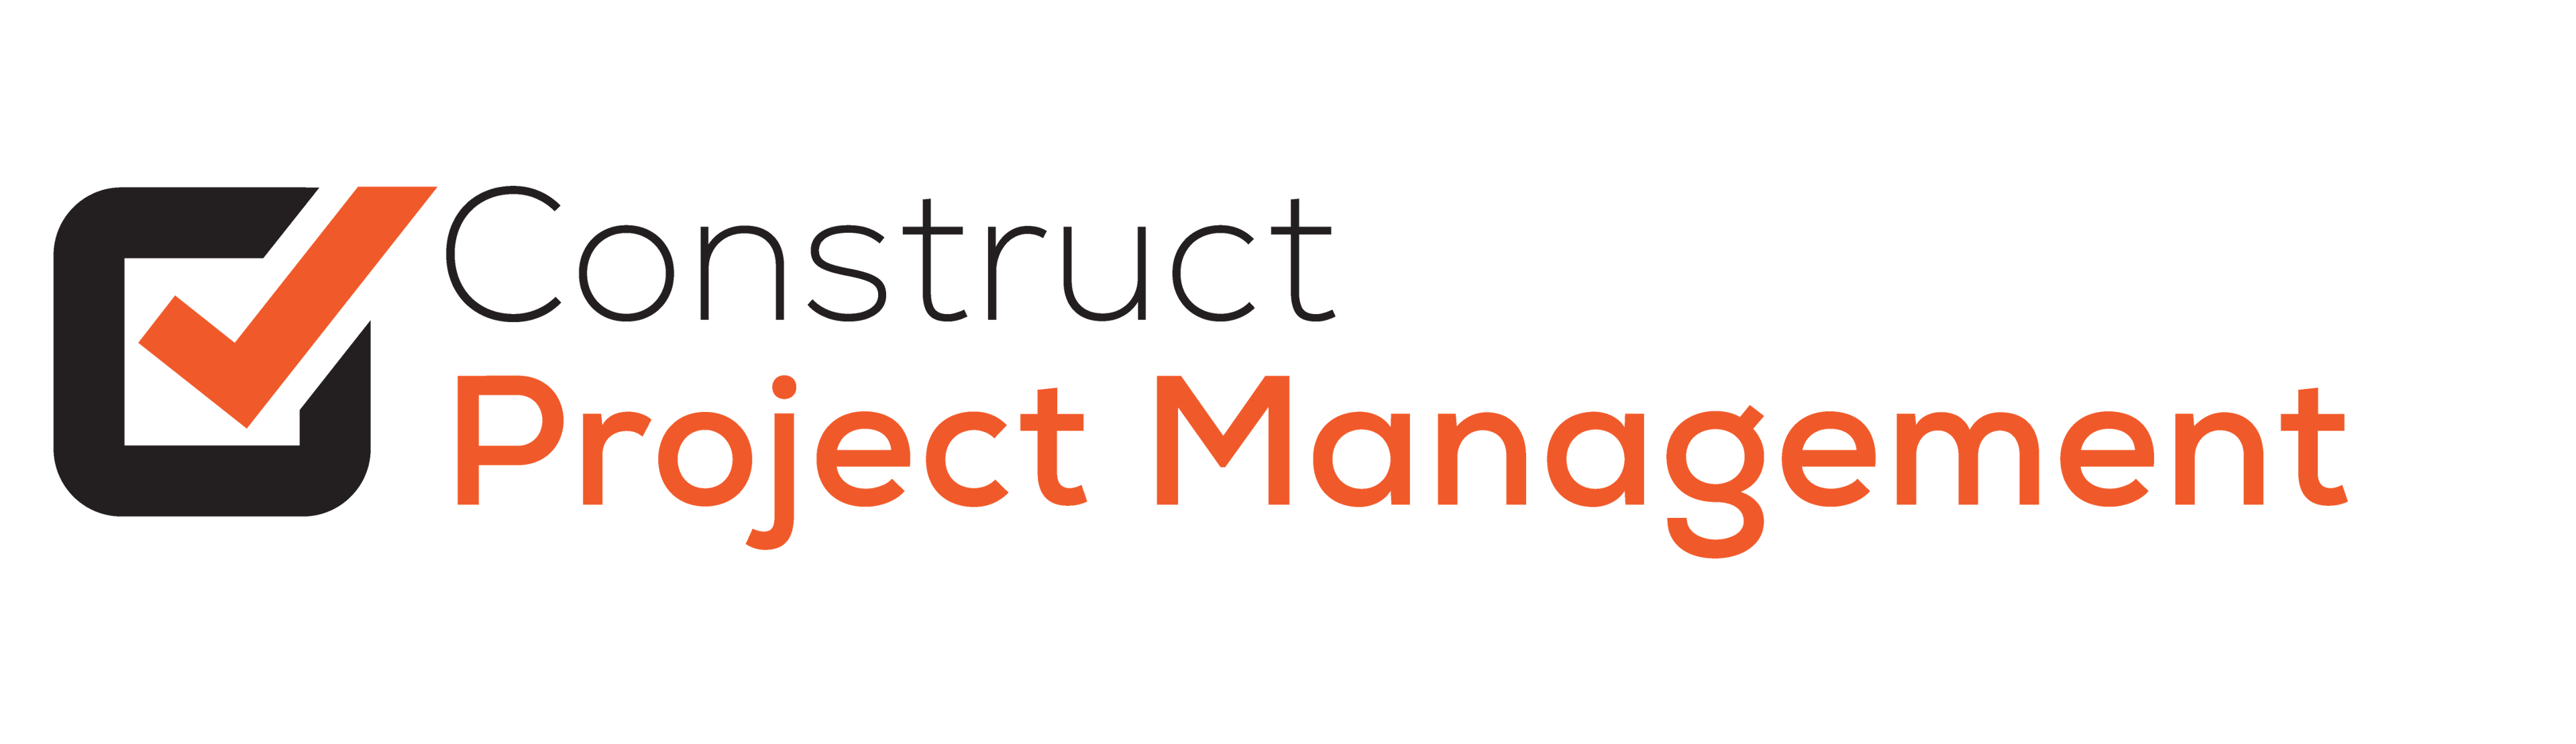 CONSTRUCT Project Management 